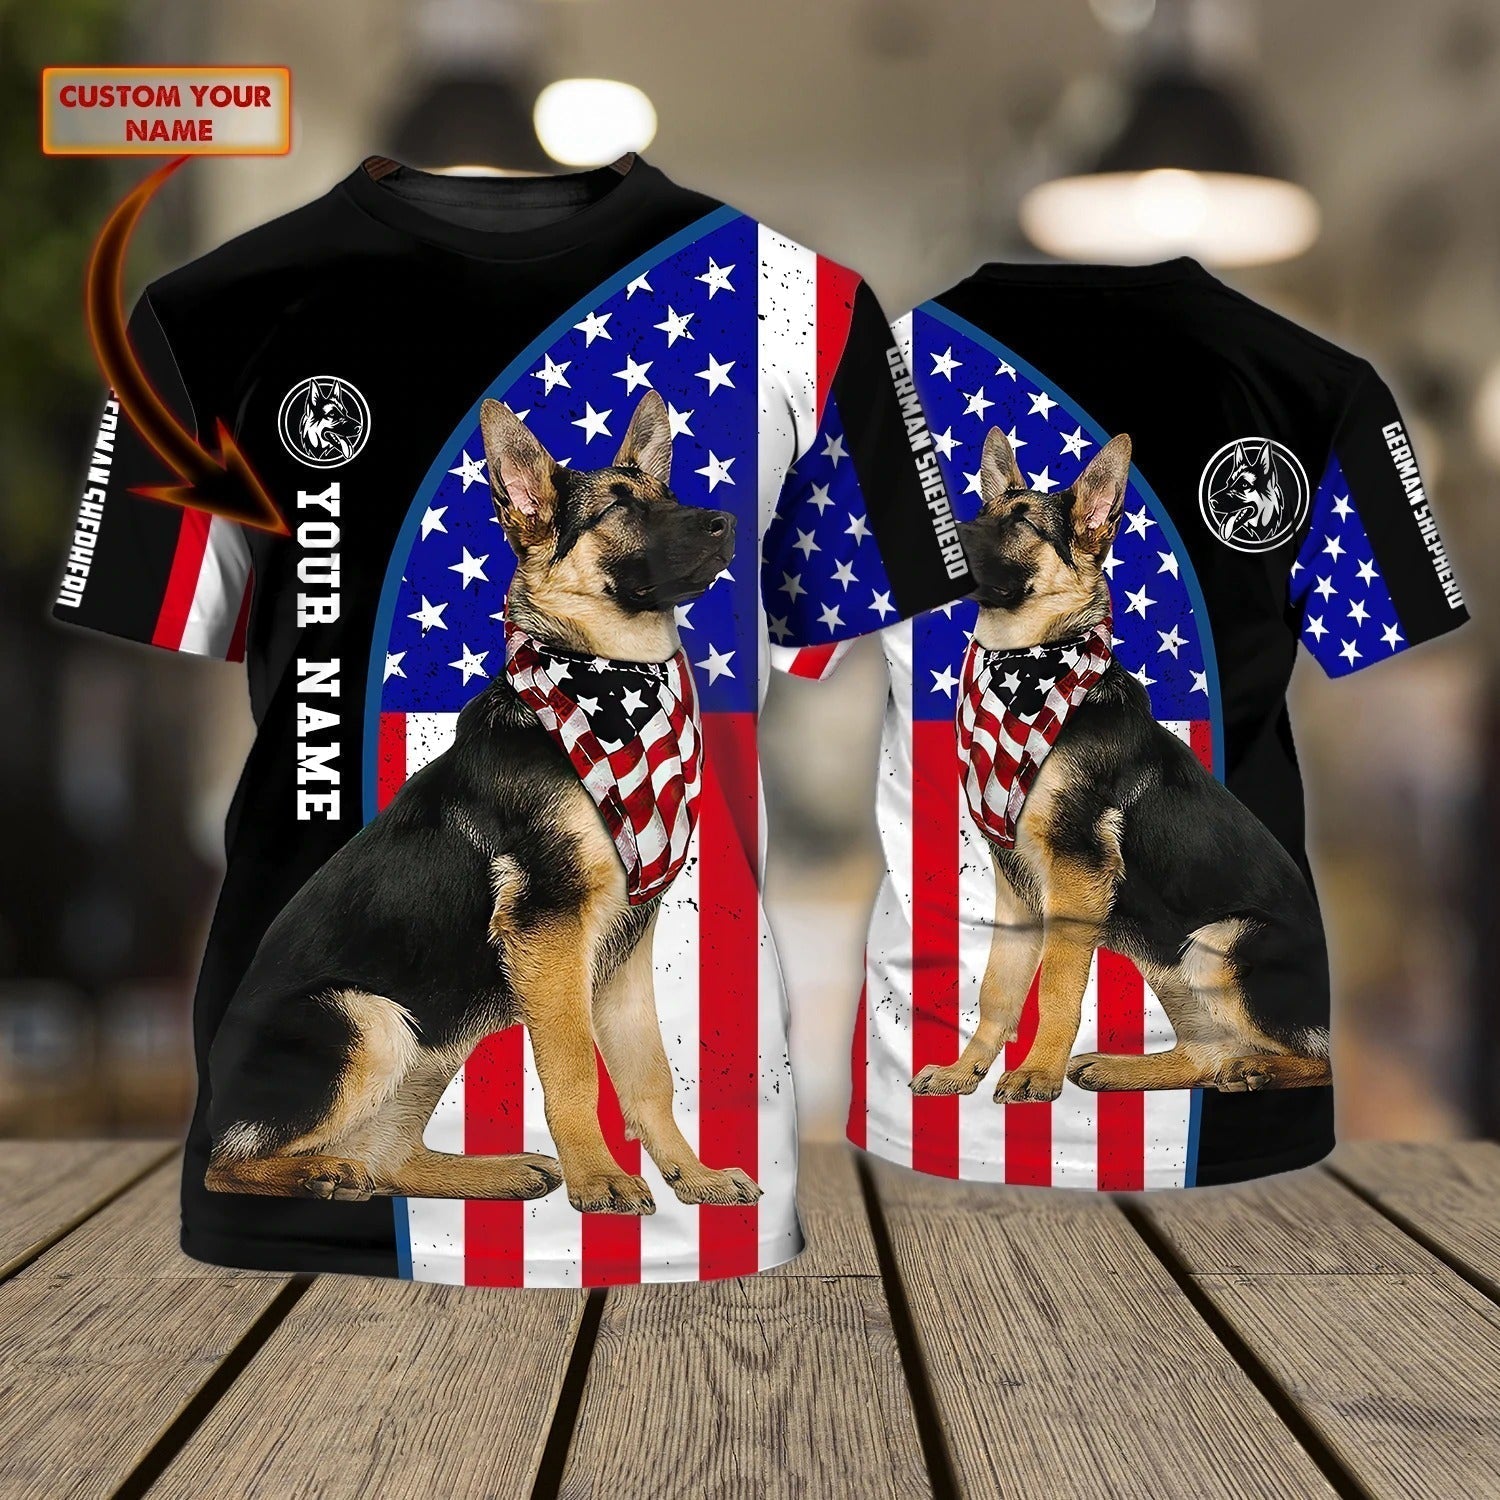 Custom With Name Tshirt For Dog Lovers/ Black German Shepherd Shirts For Him Her/ Black Shepherd Shirt